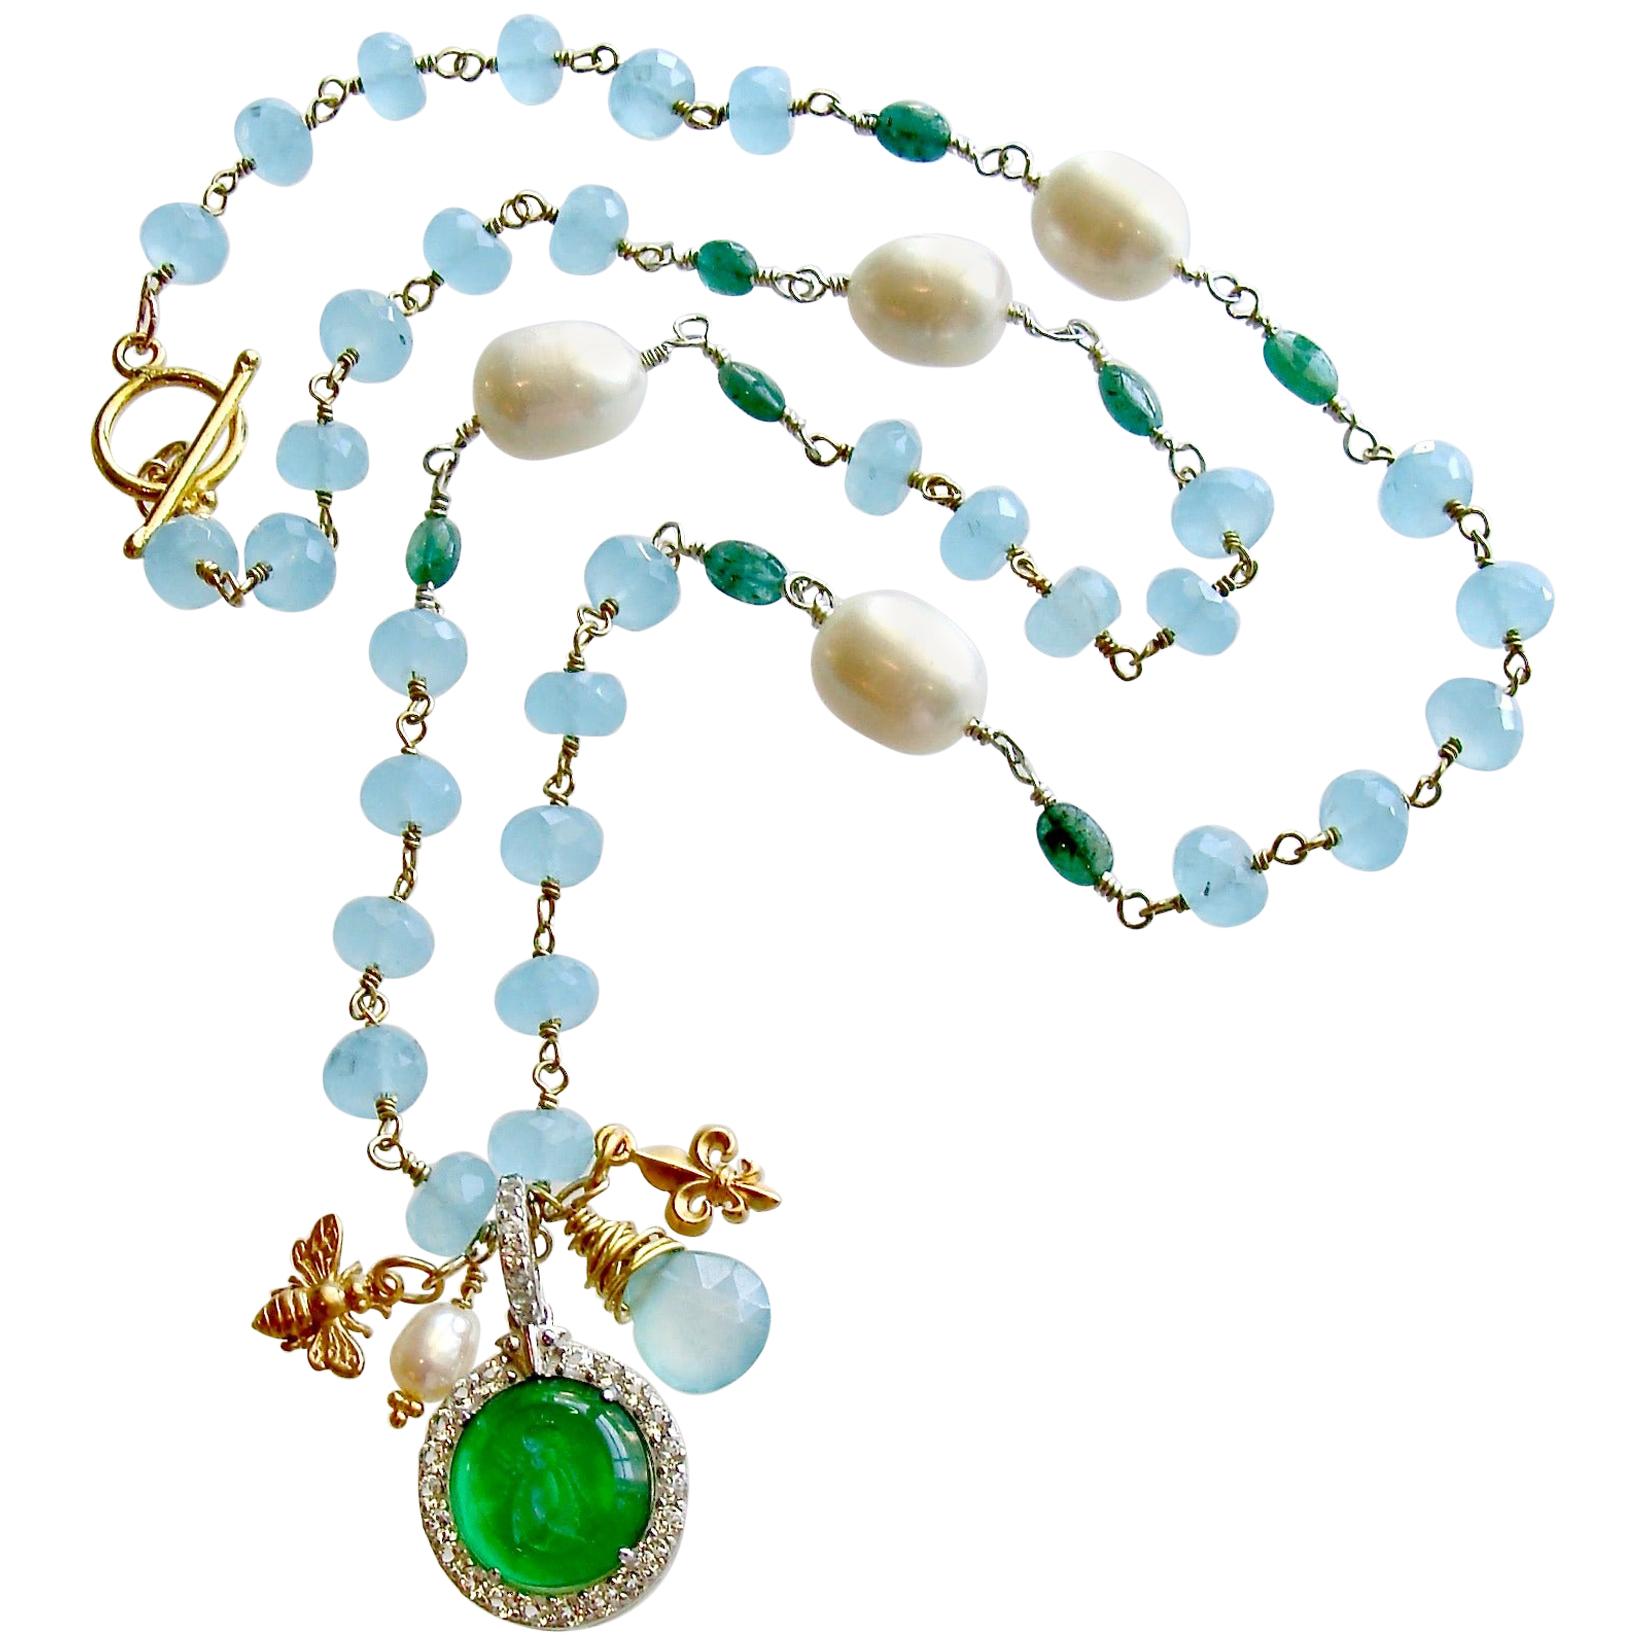 Napoleonic Bee Venetian Glass Intaglio Aqua Chalcedony Emerald Pearl Necklace